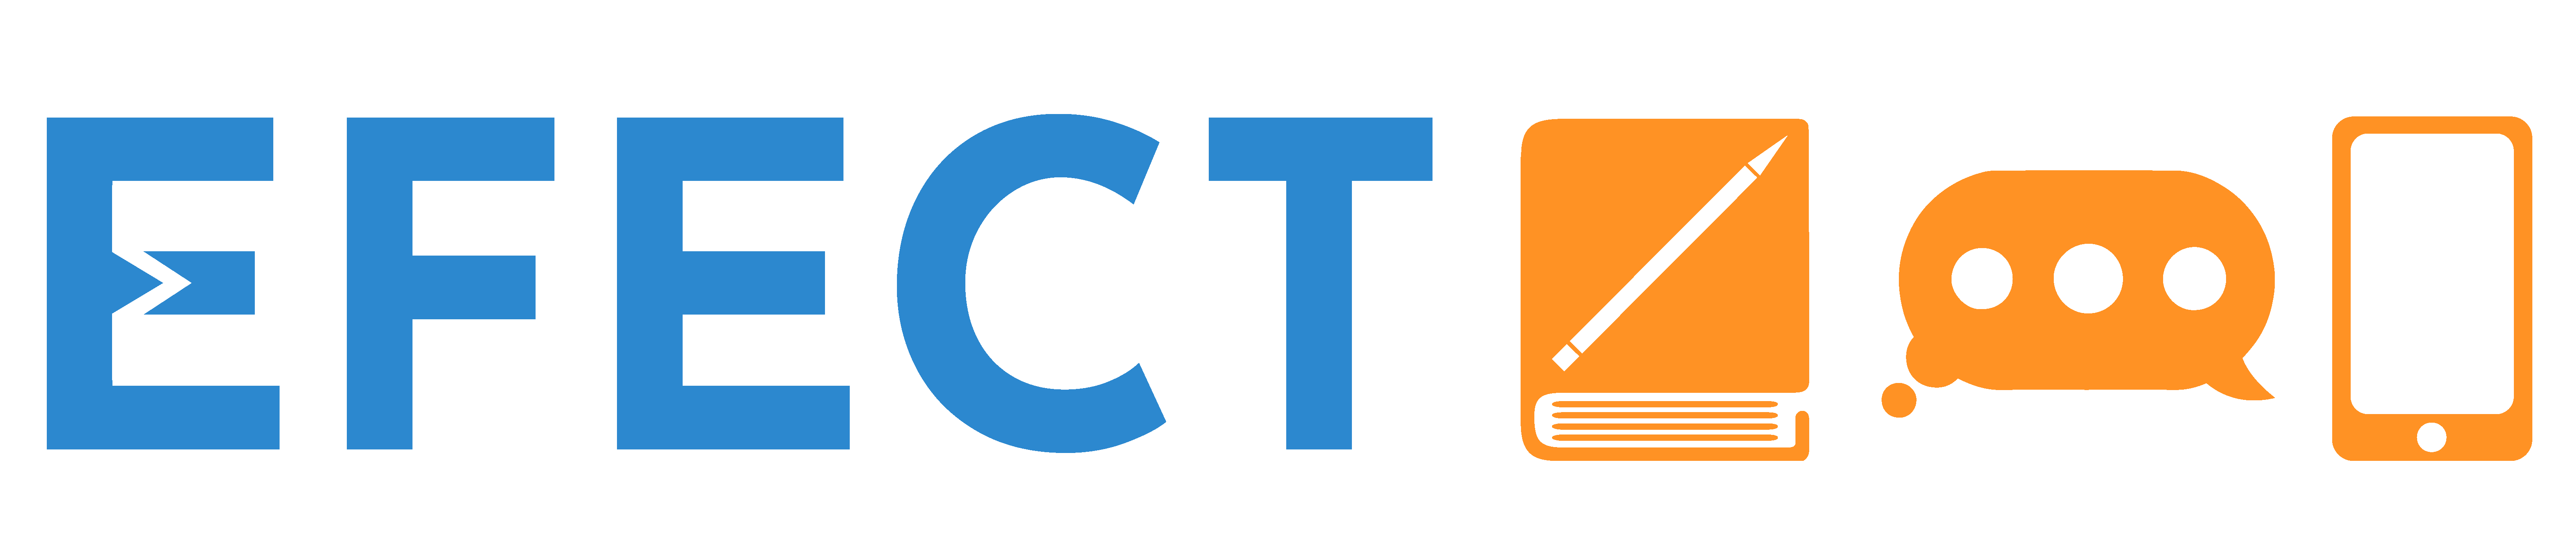 EFECT logo